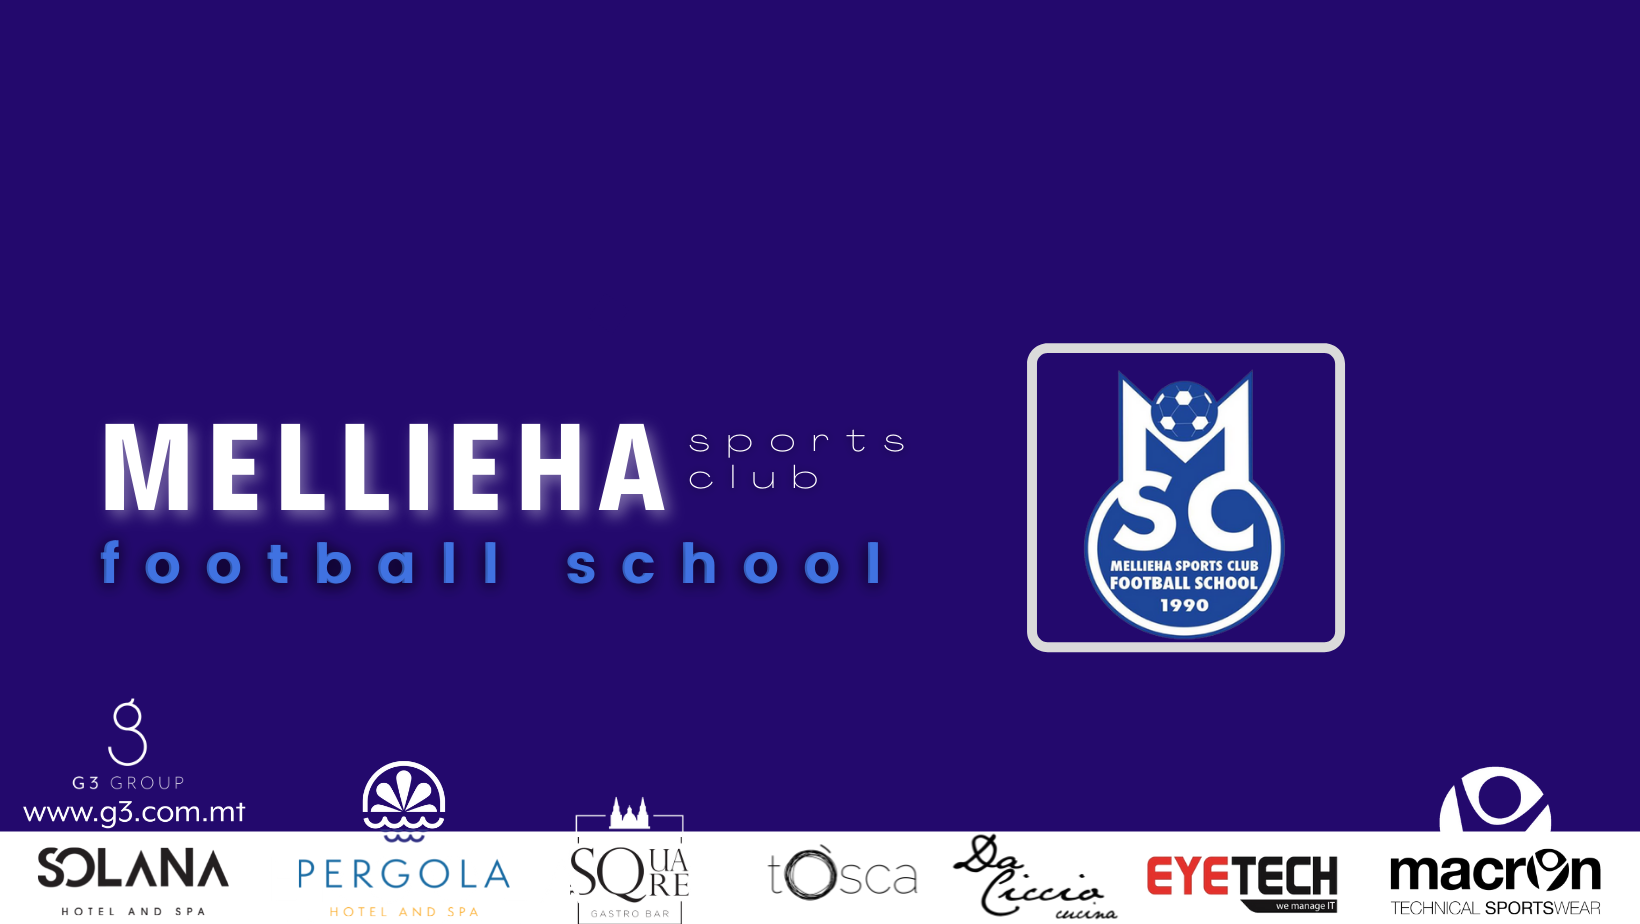 Mellieha Background & Sponsors